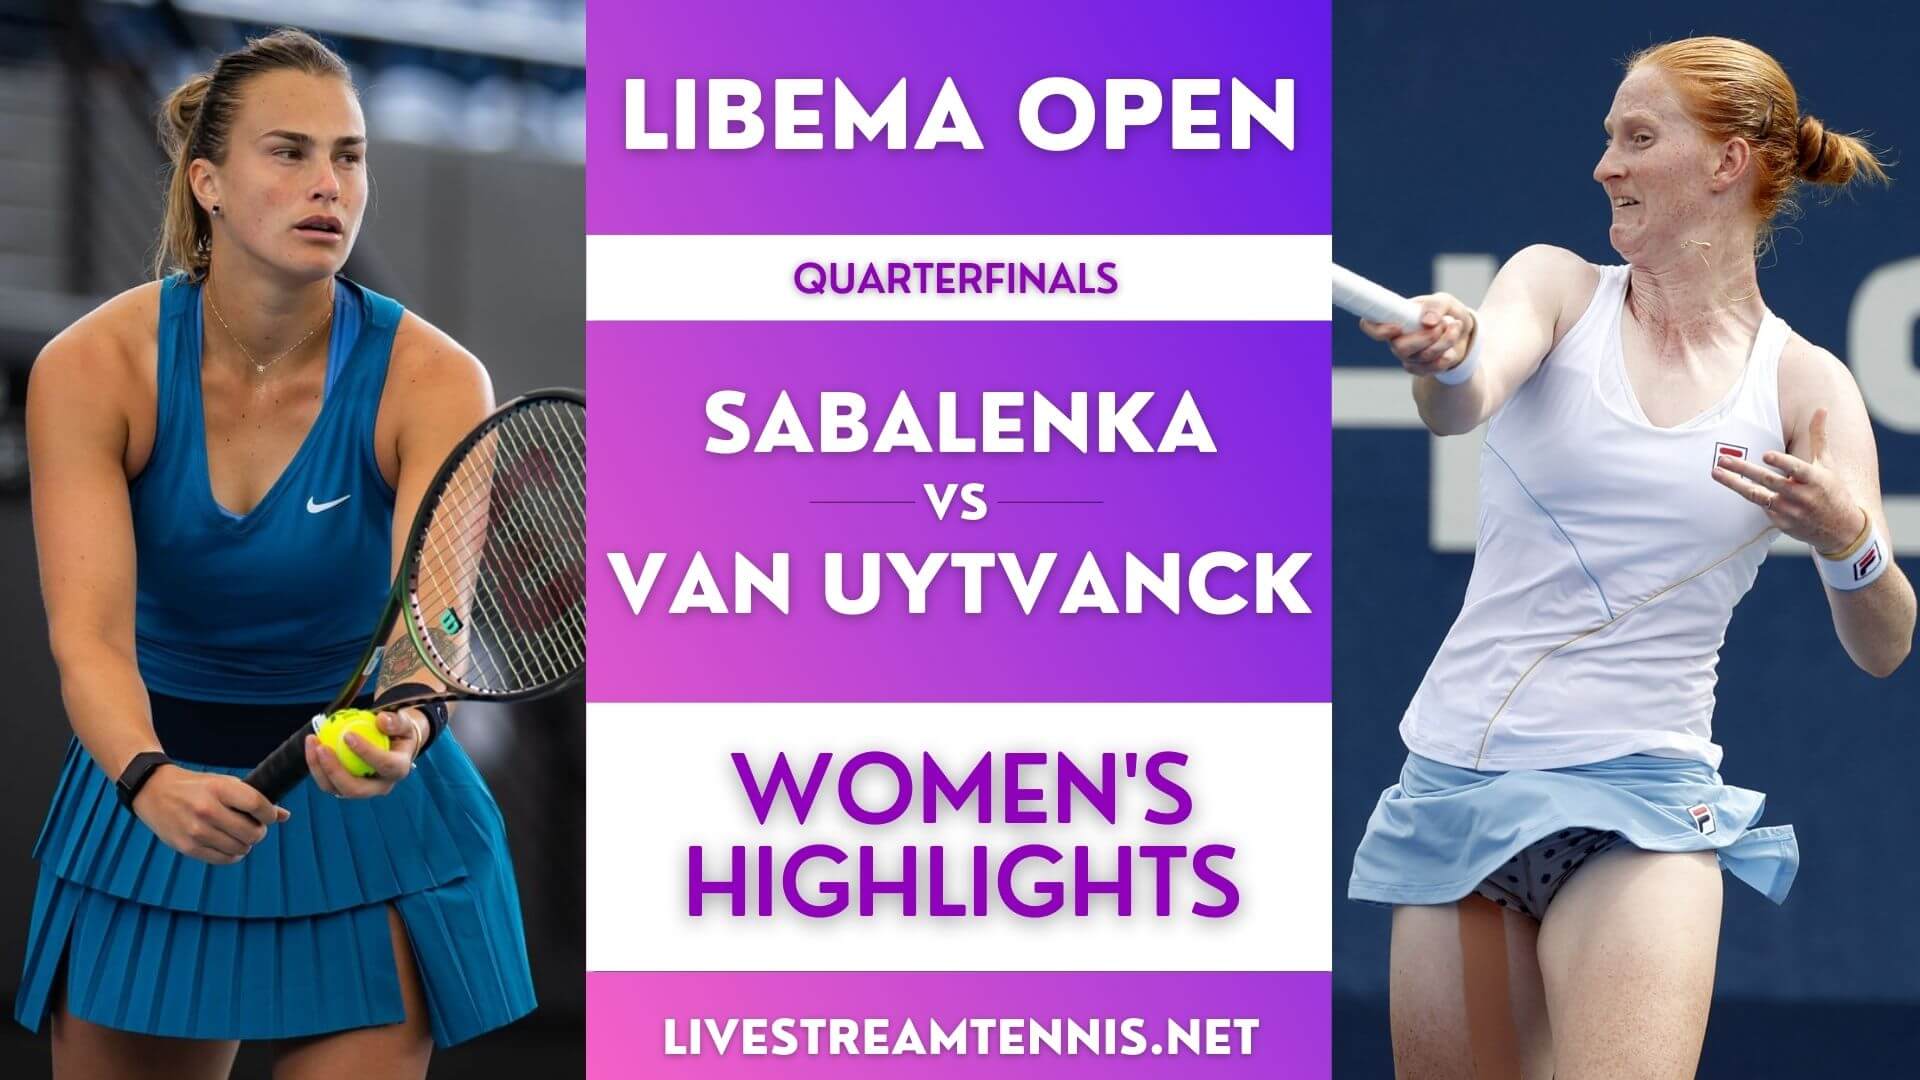 Libema Open Ladies Quarterfinal 2 Highlights 2022